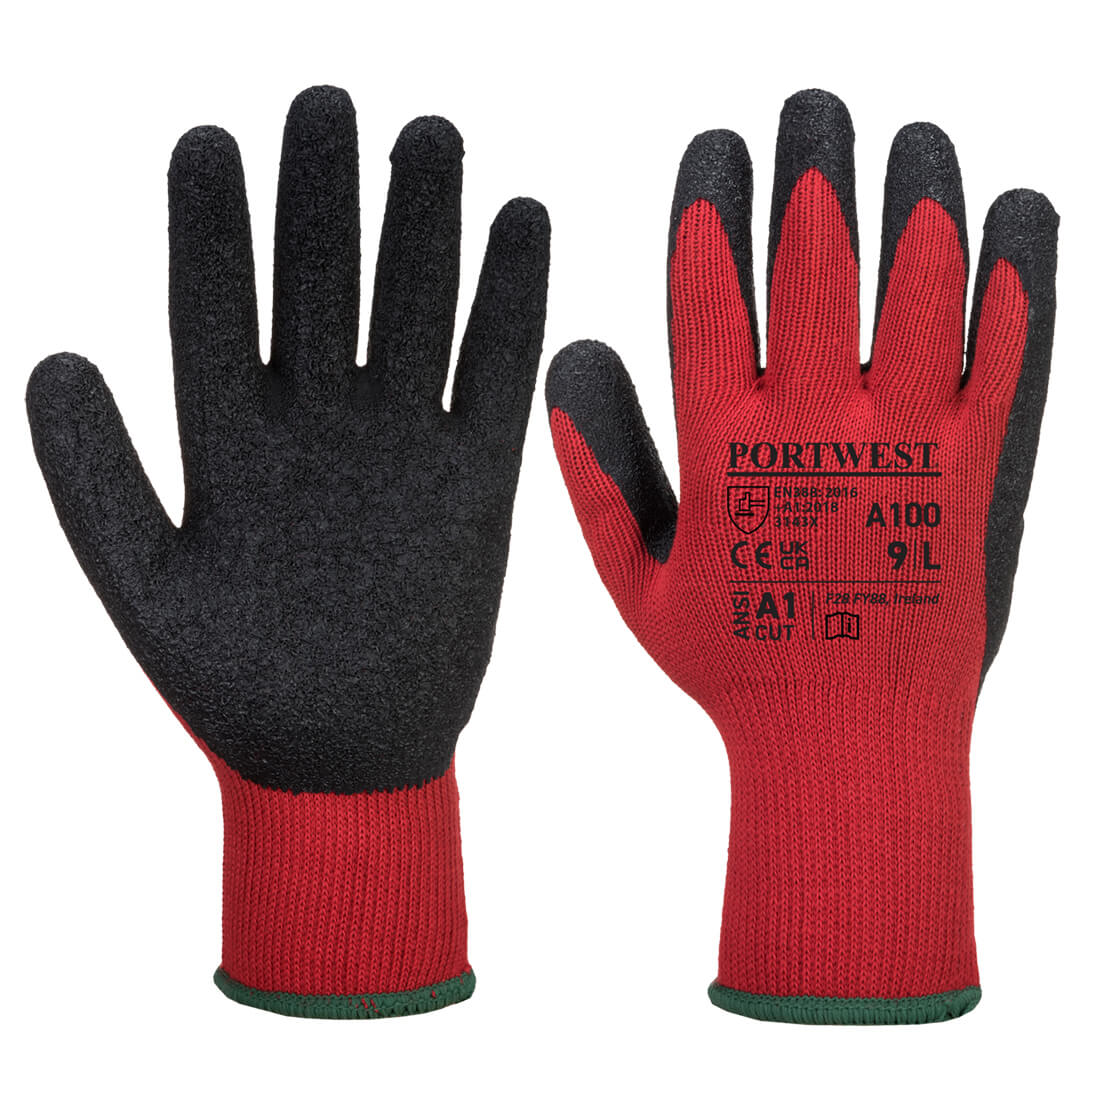 Grip Glove - Latex - Red/Black